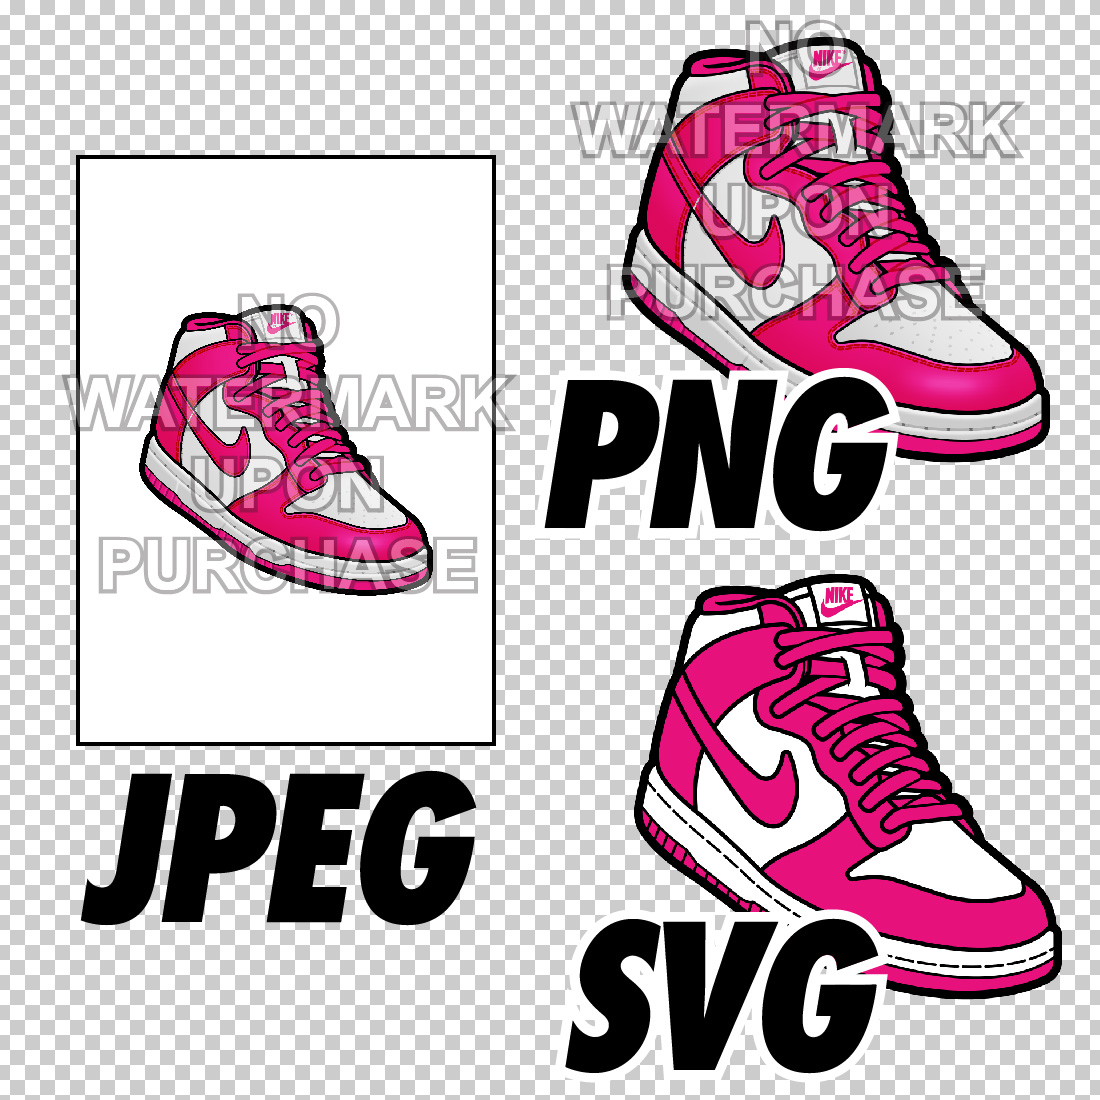 Nike Dunk High Prime Pink JPEG PNG SVG digital sneaker art preview image.